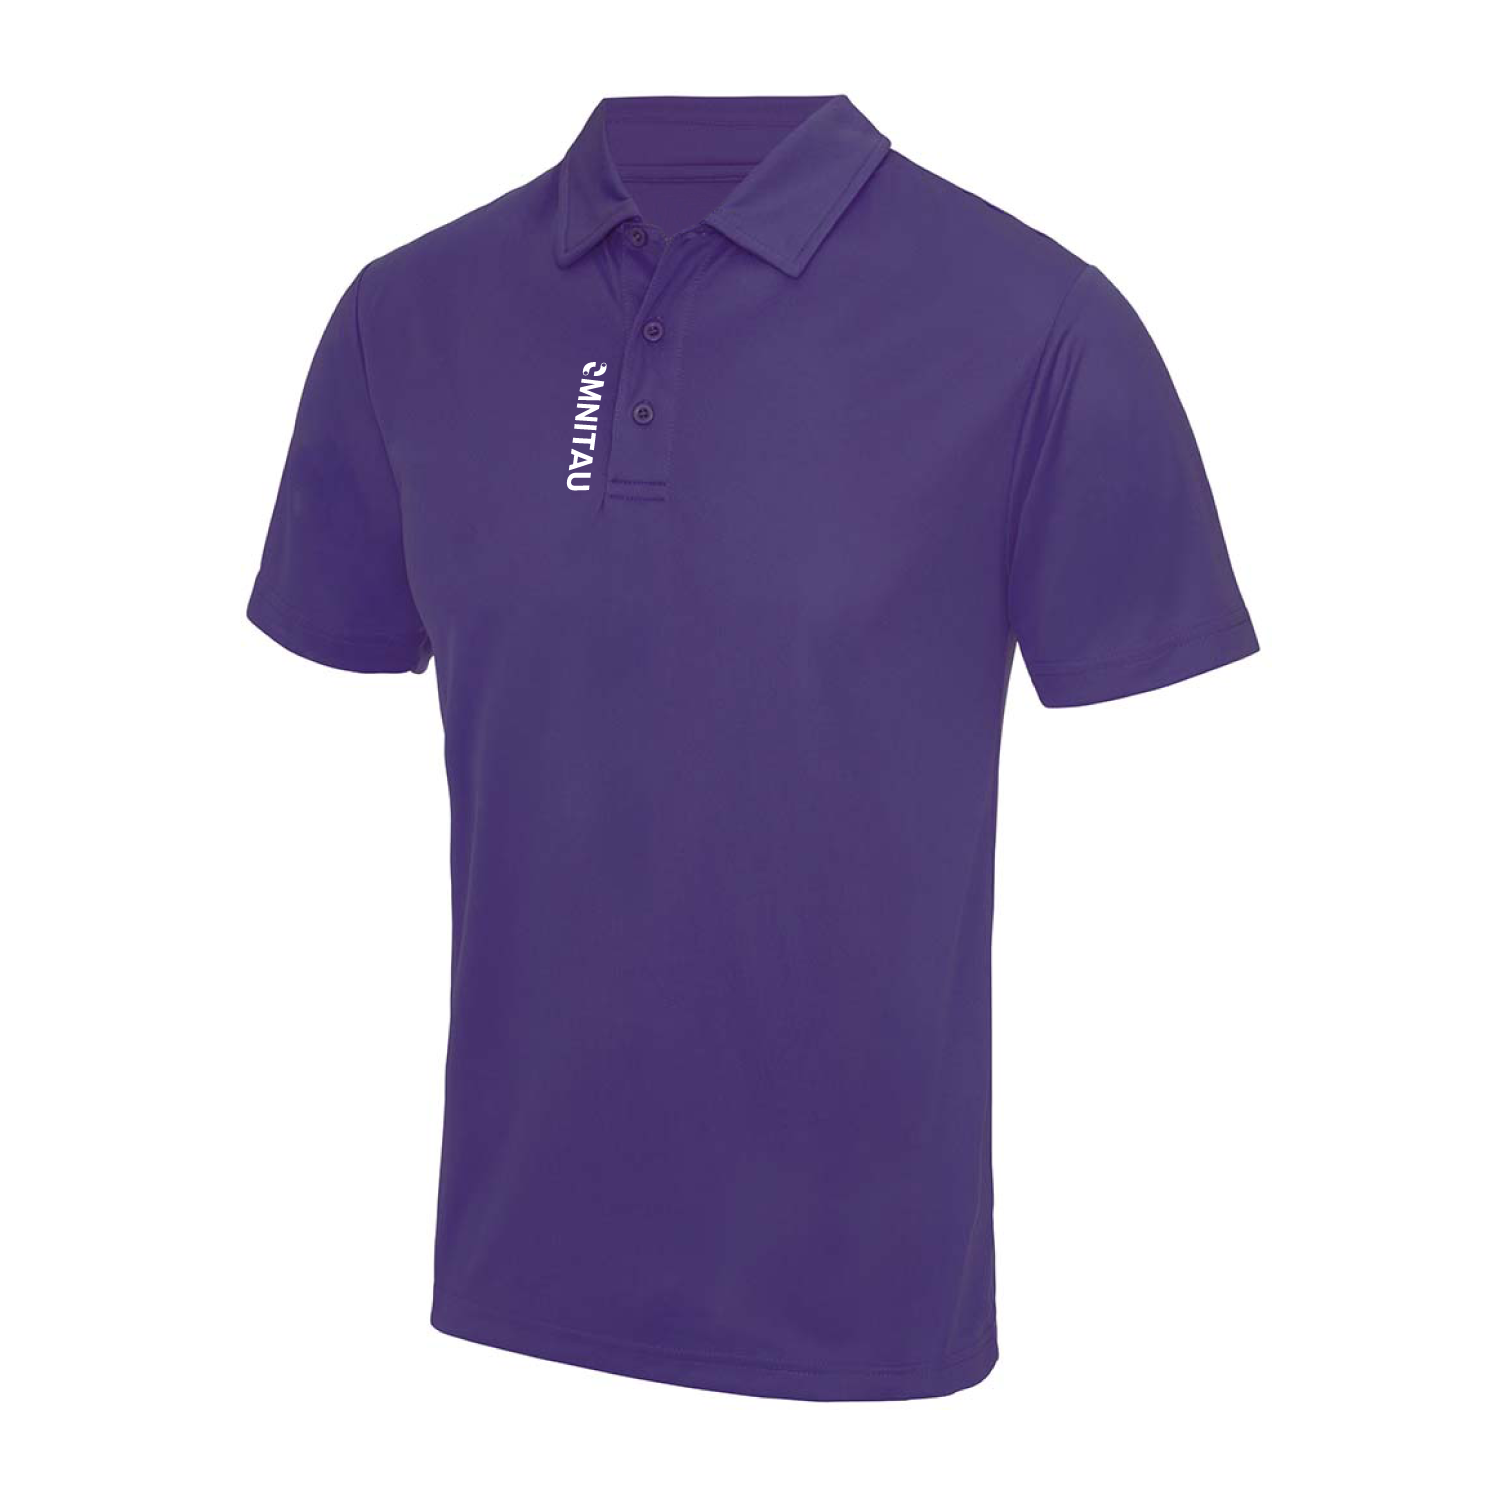 Omnitau Men's Sustainable Breathable Classic Golf Polo Shirt - Purple